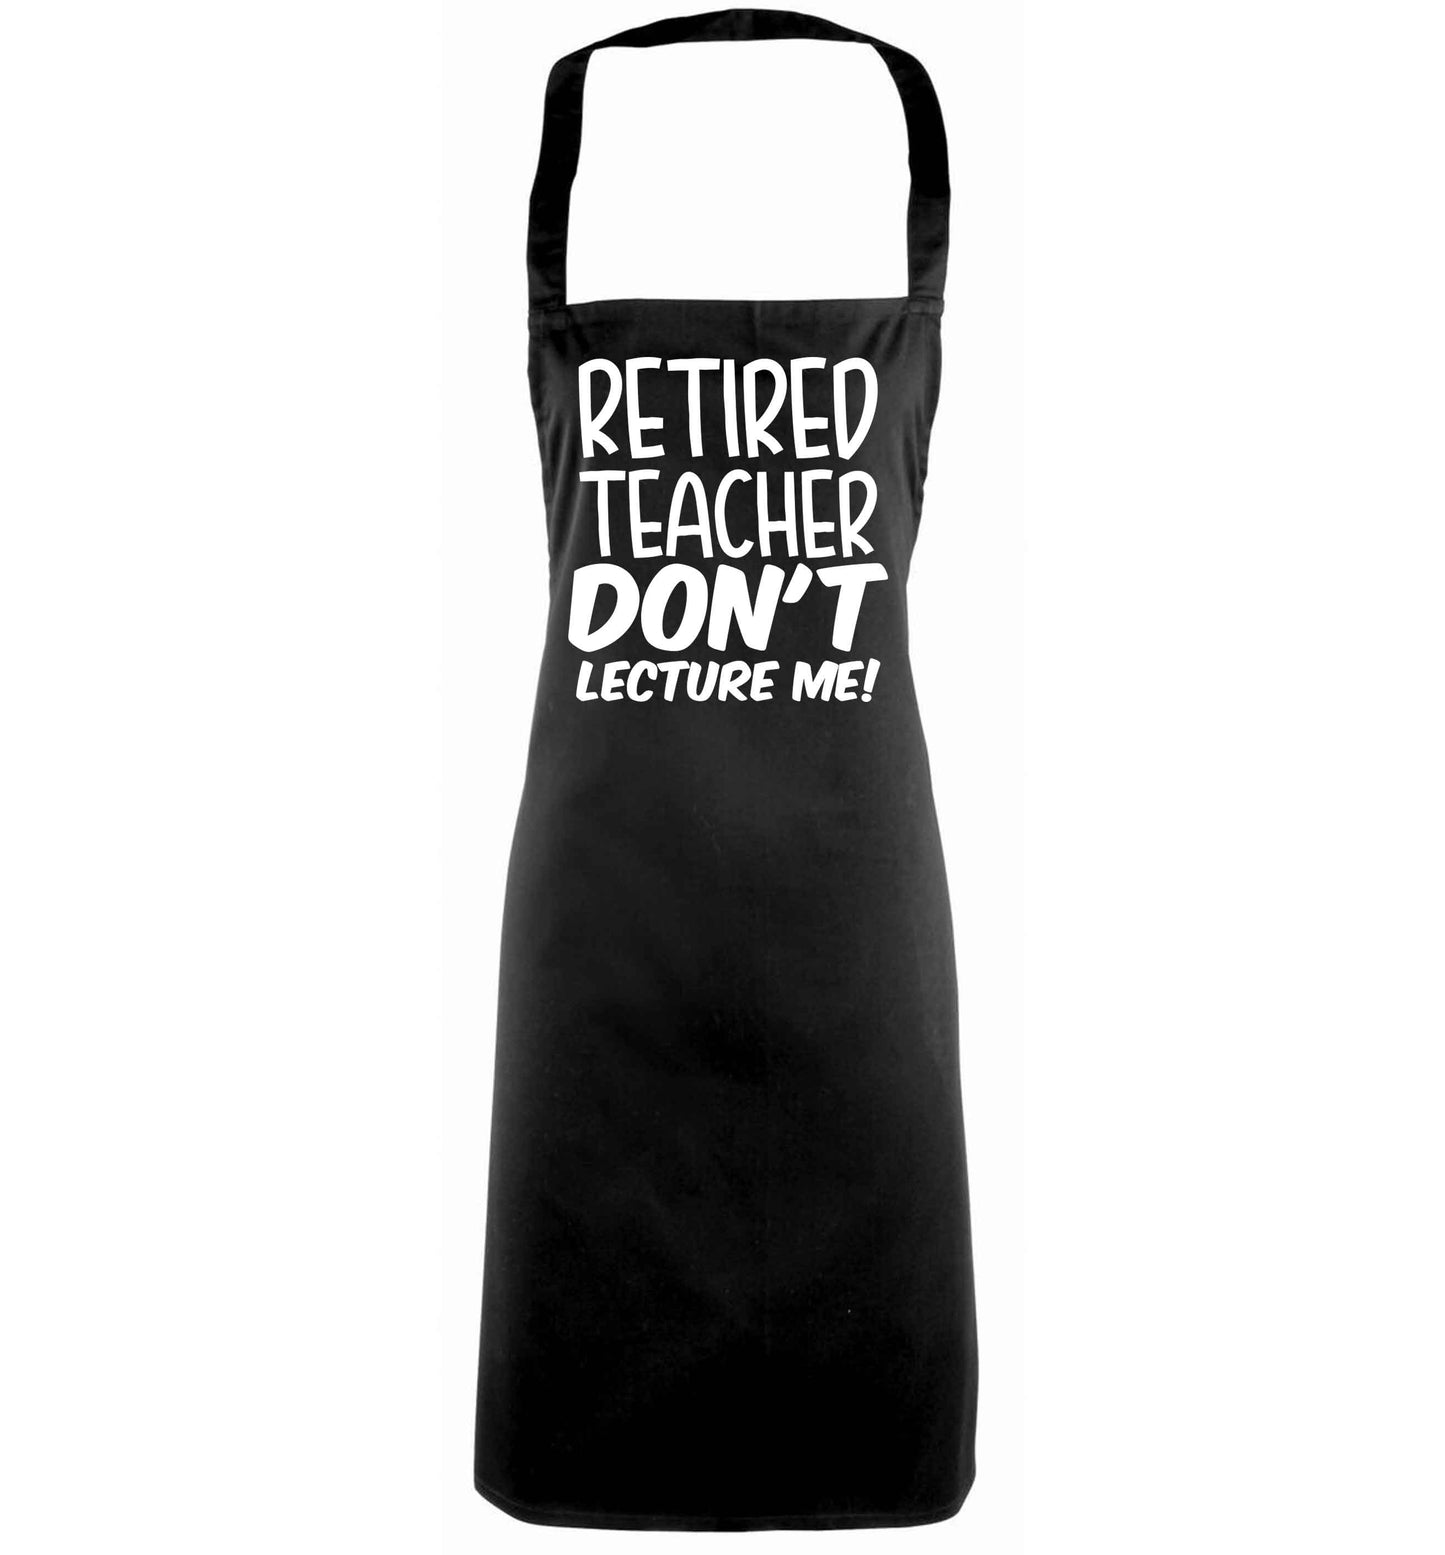 Retired teacher don't lecture me! black apron